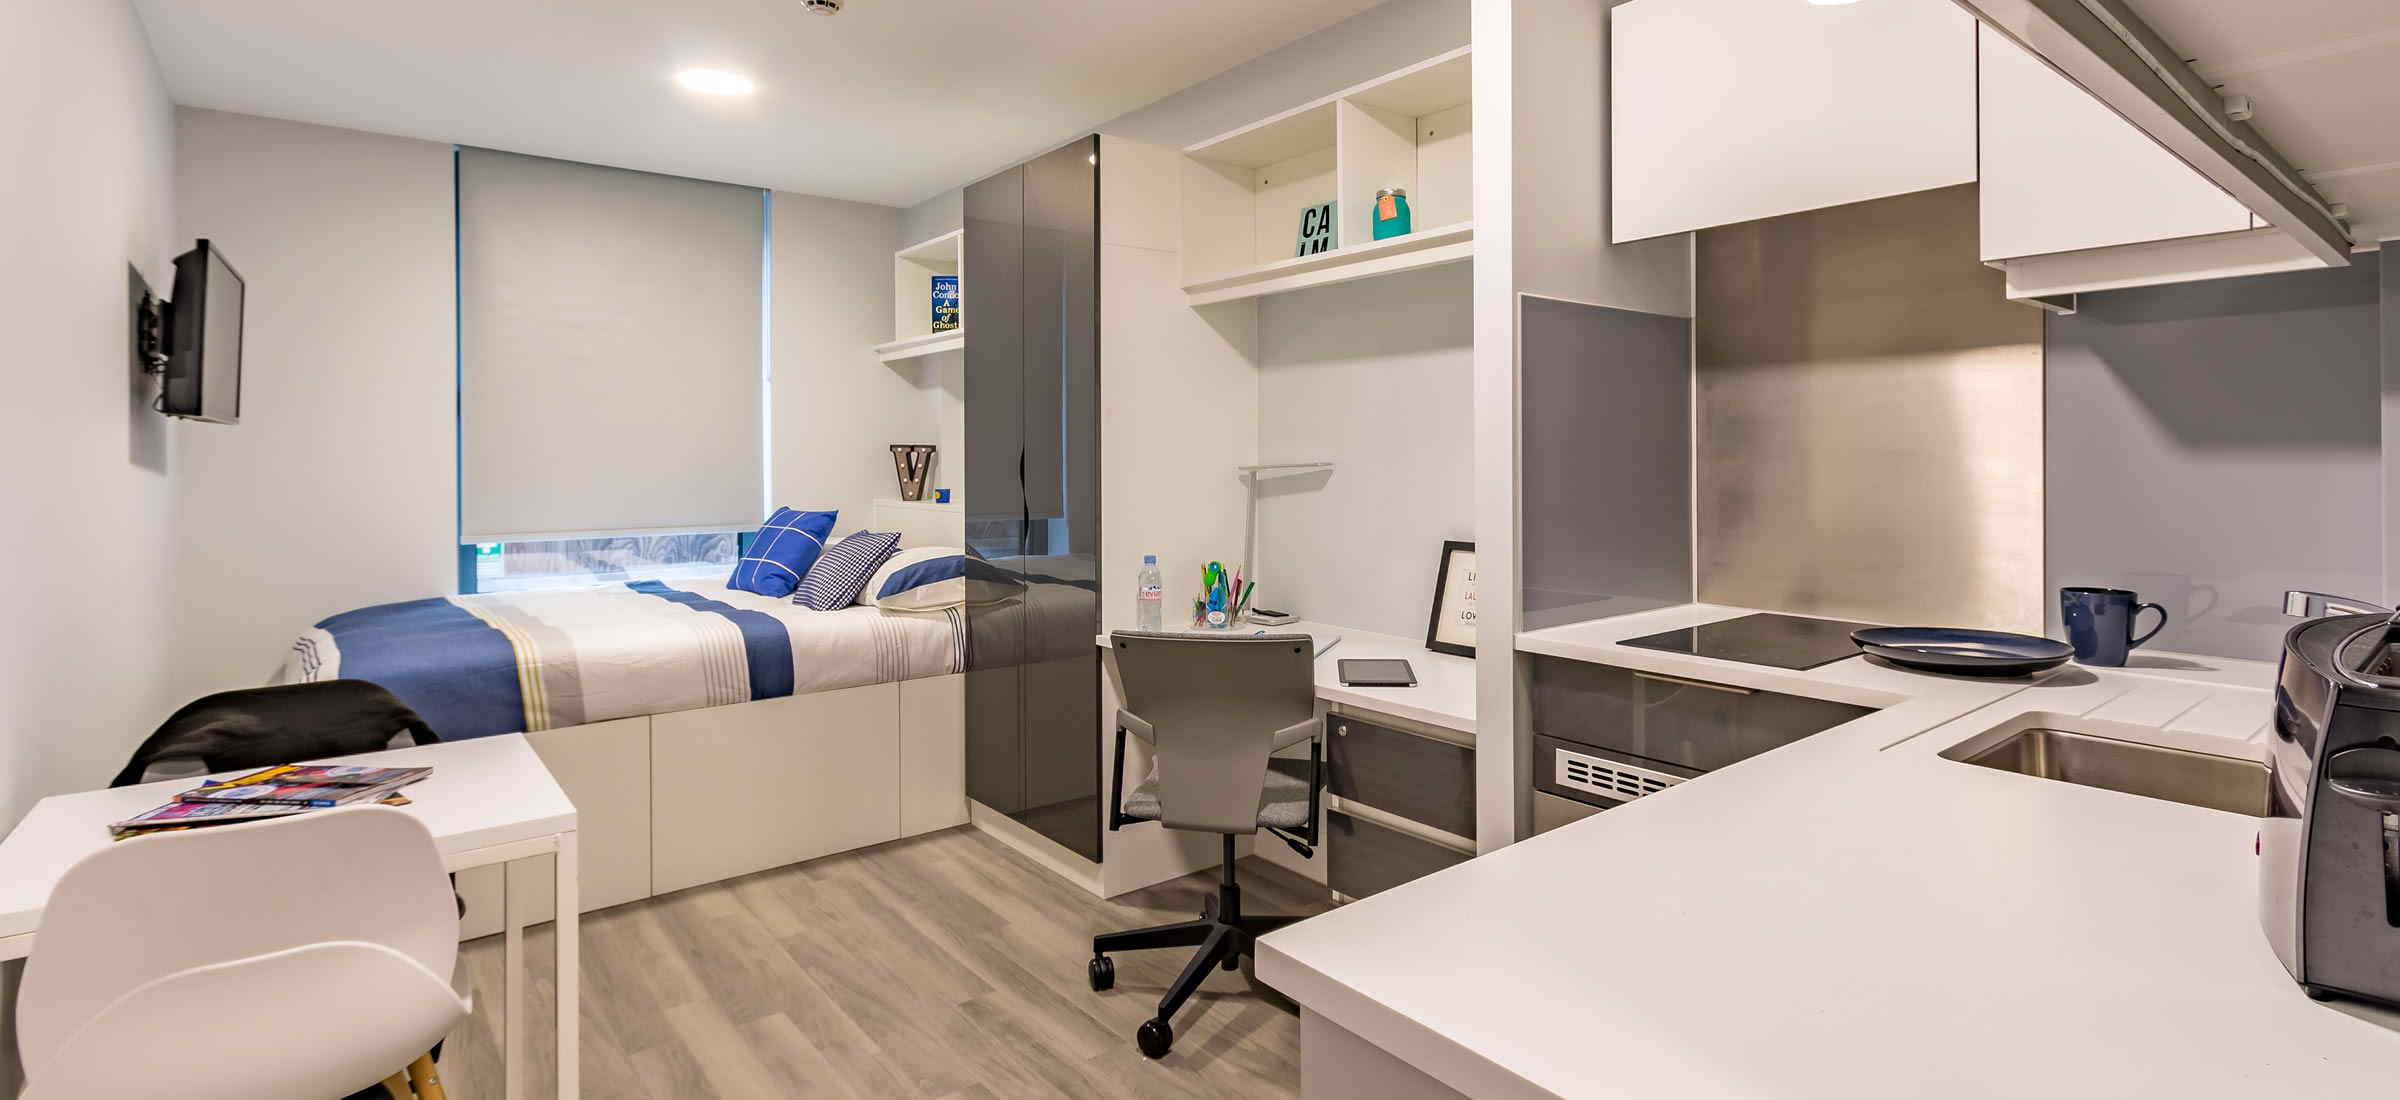 Vibe student living standard studio accommodation